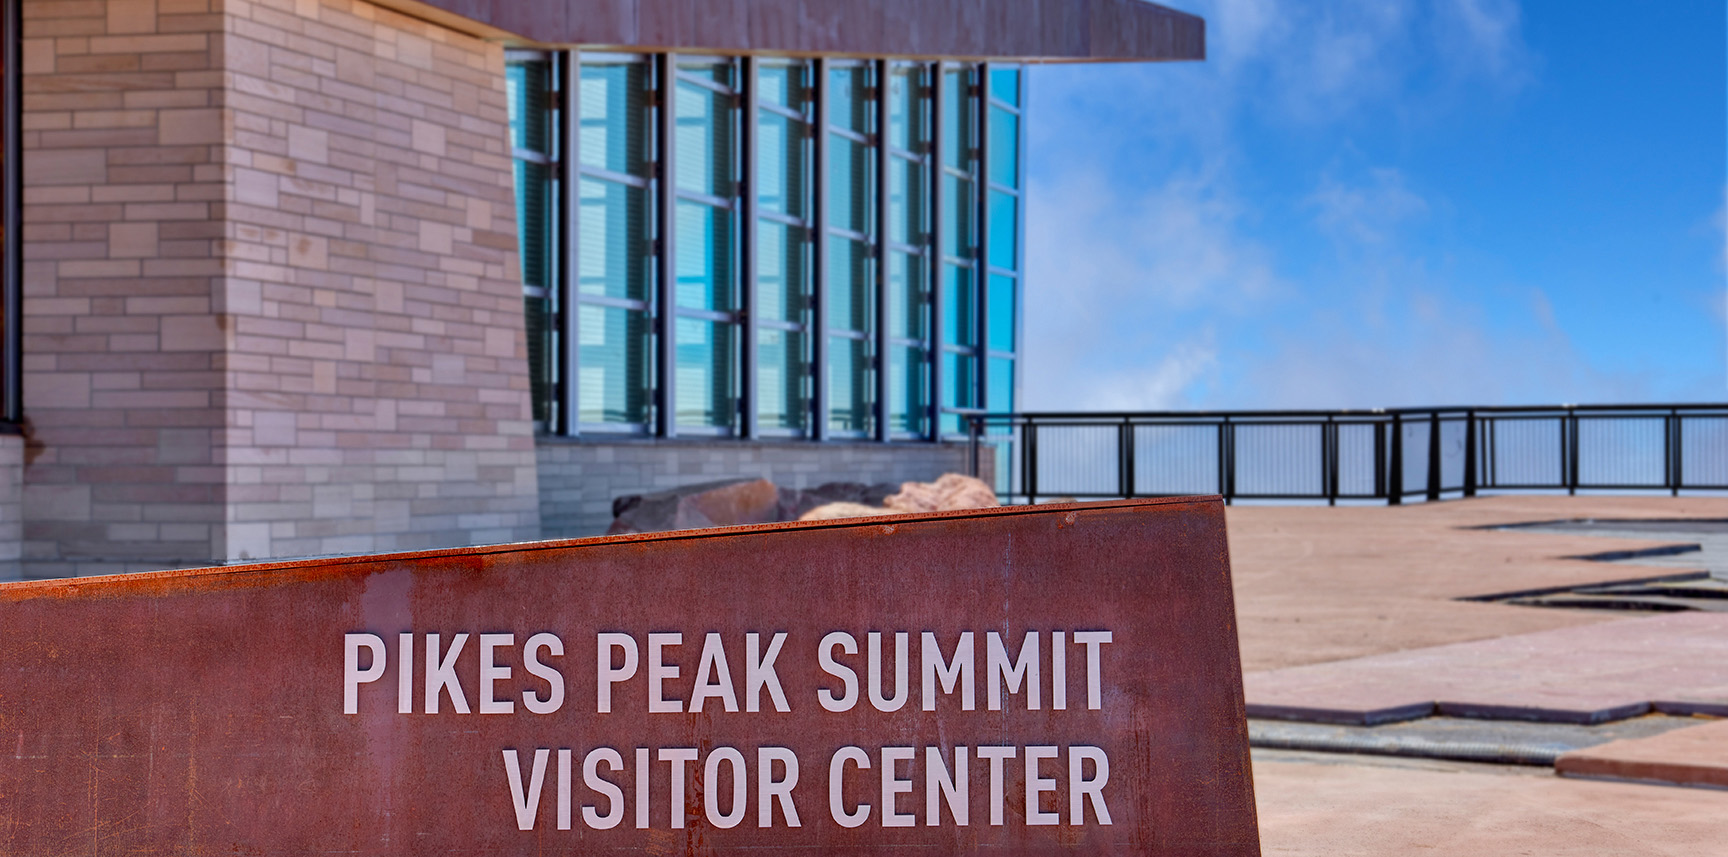 Pikes Peak Summit Visitor Center, Colorado Springs, Colorado